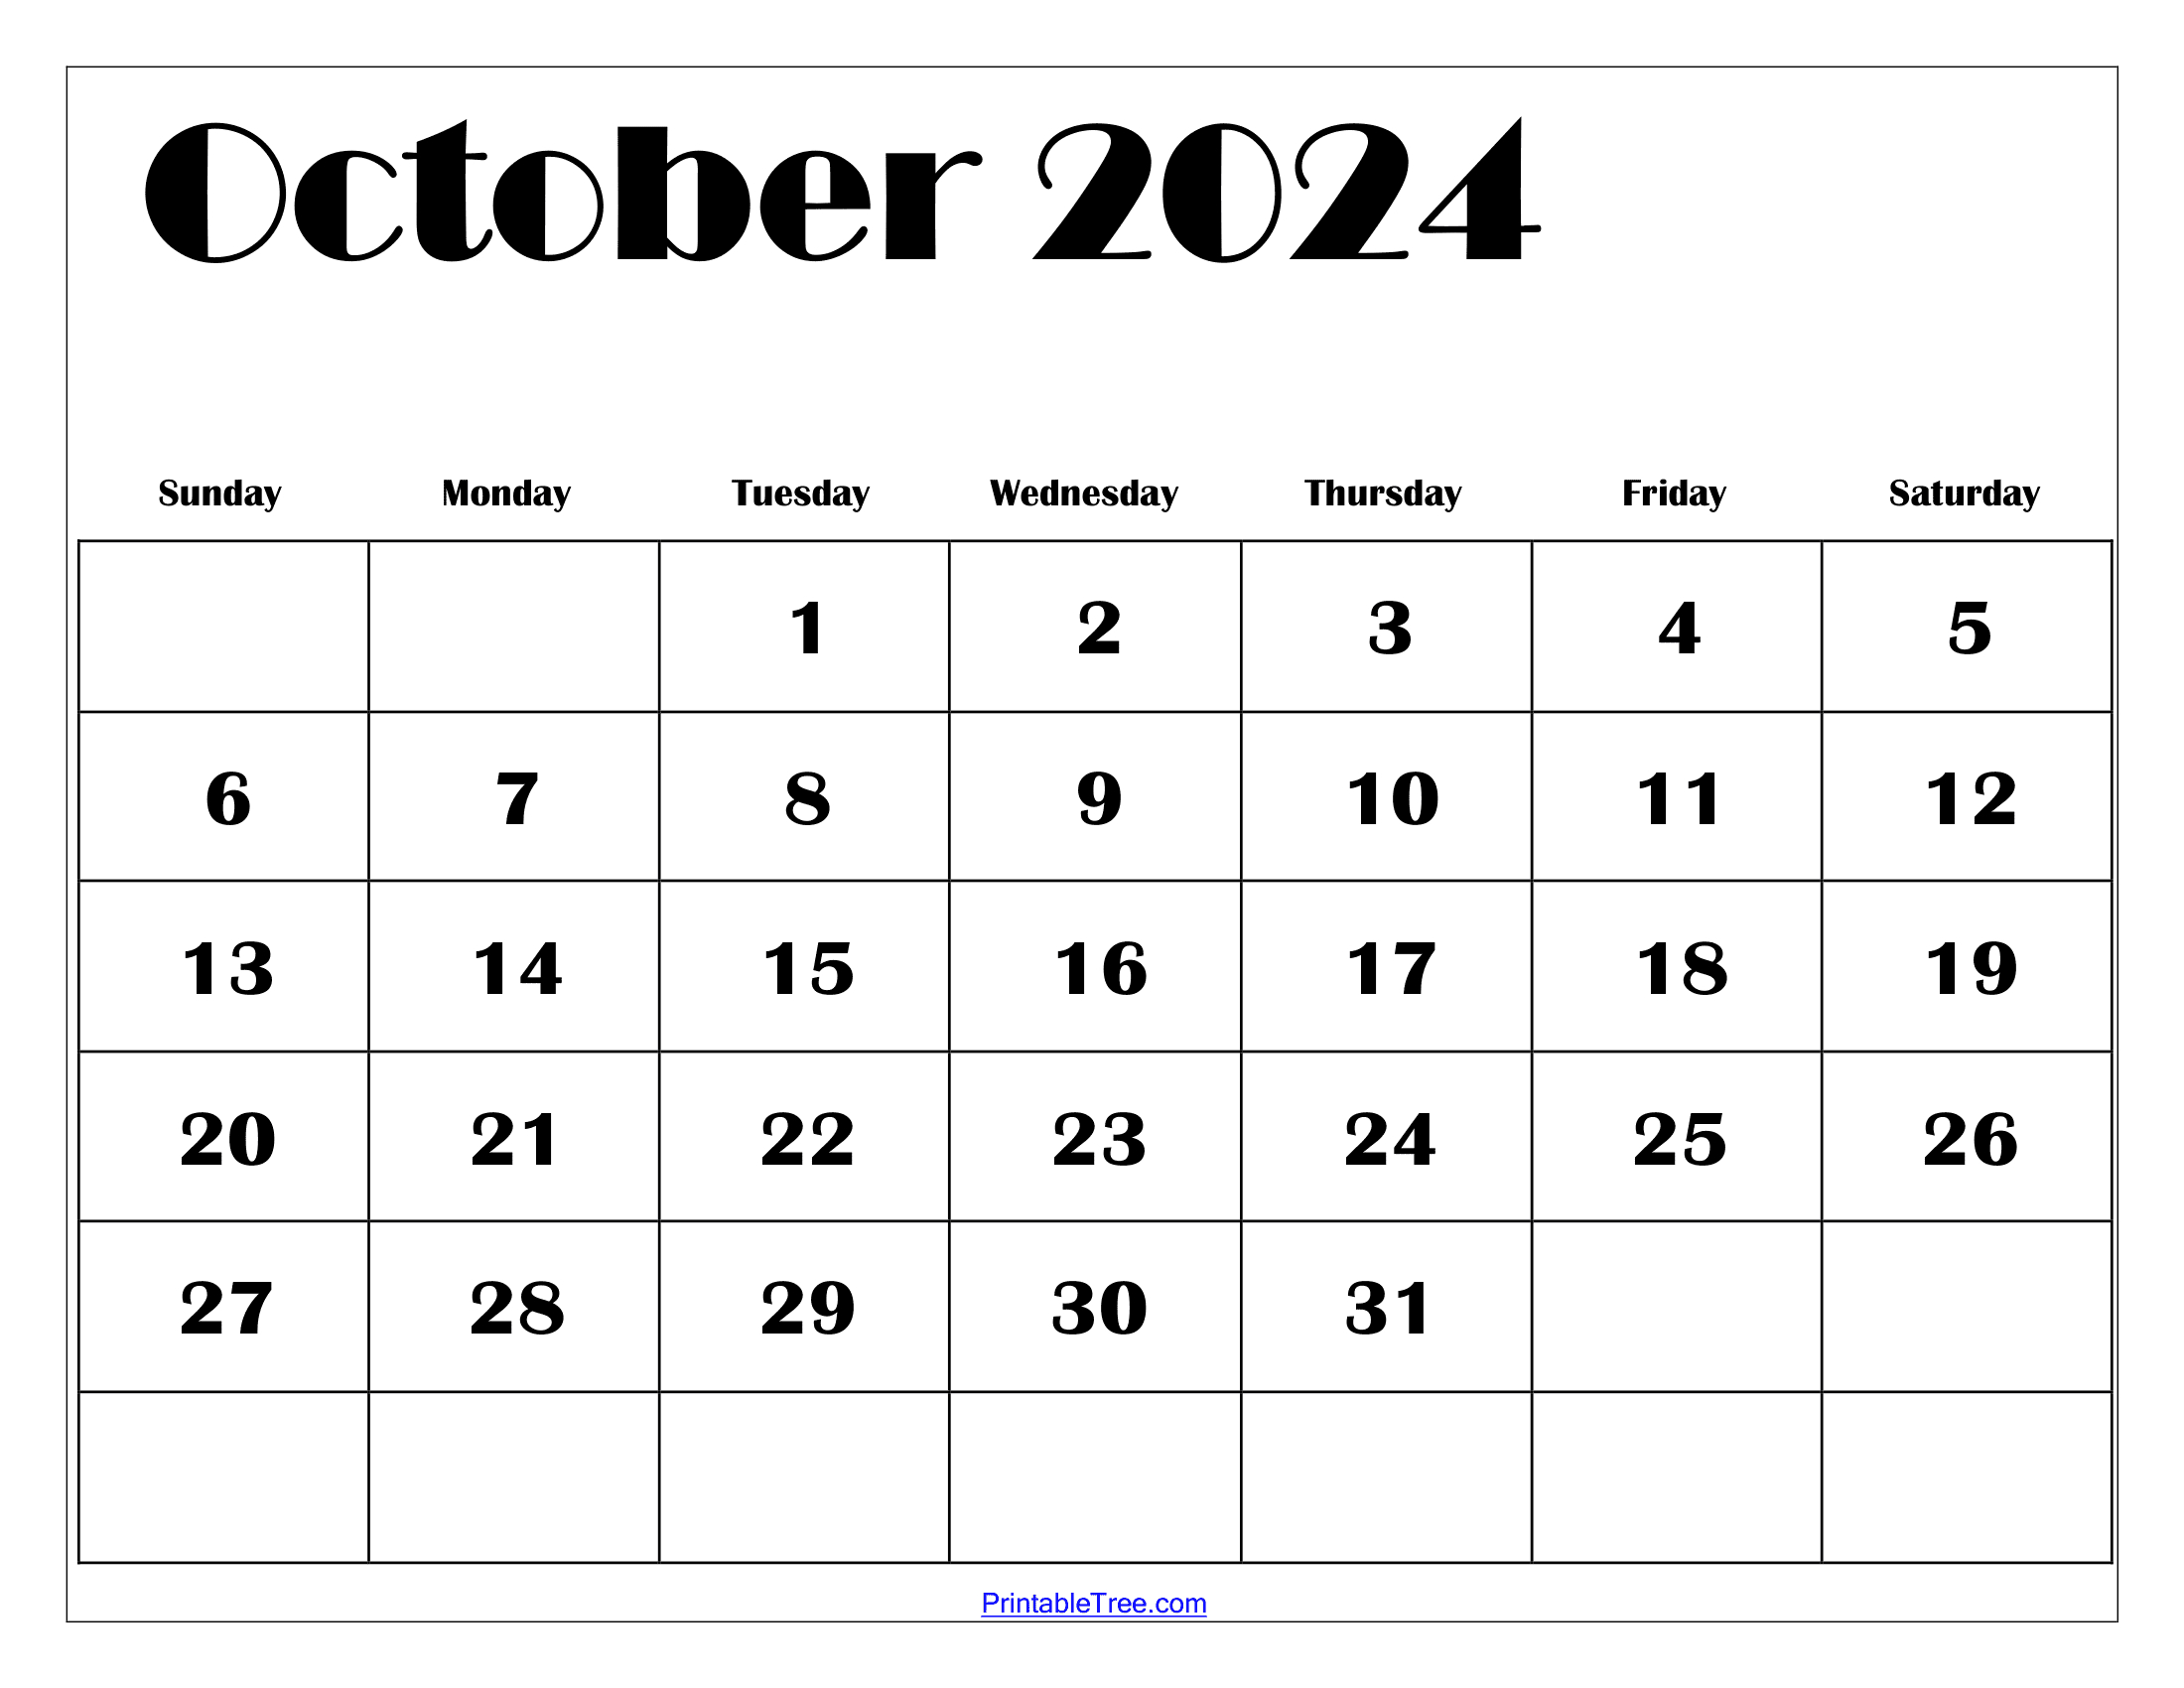 October 2024 Calendar Printable Pdf Free Templates With Holidays | Printable Calendar 2024 October